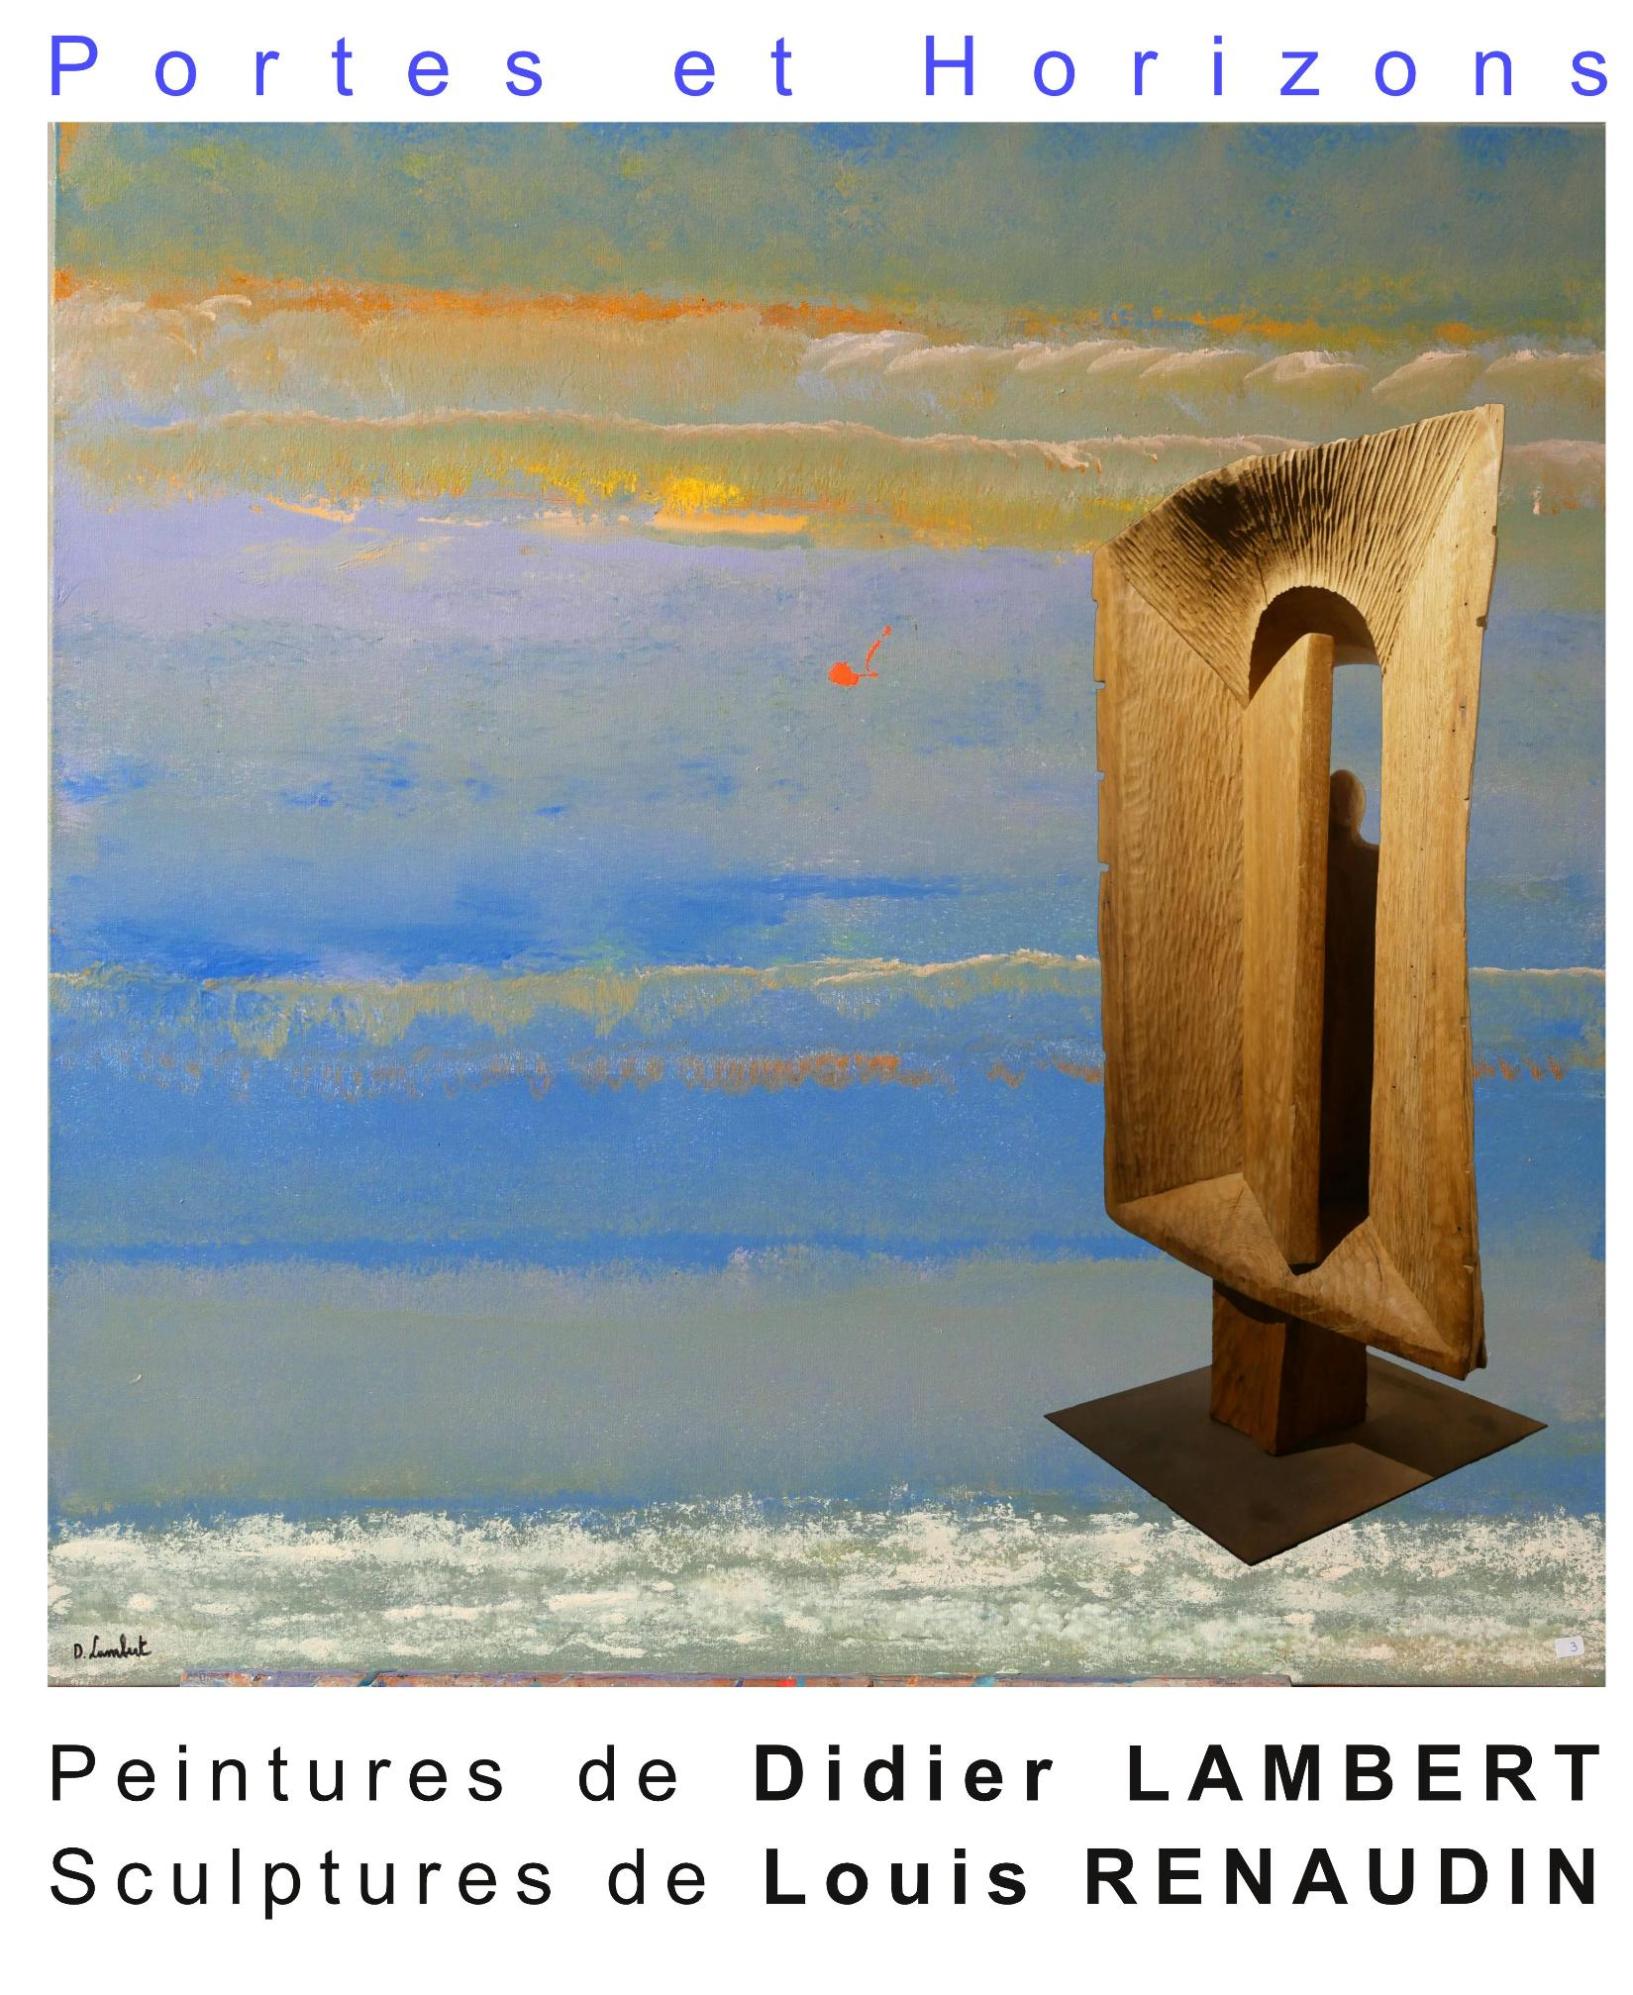 Exposition Portes et Horizons Sculptures de Louis Renaudin et Peintures de Didier Lambert